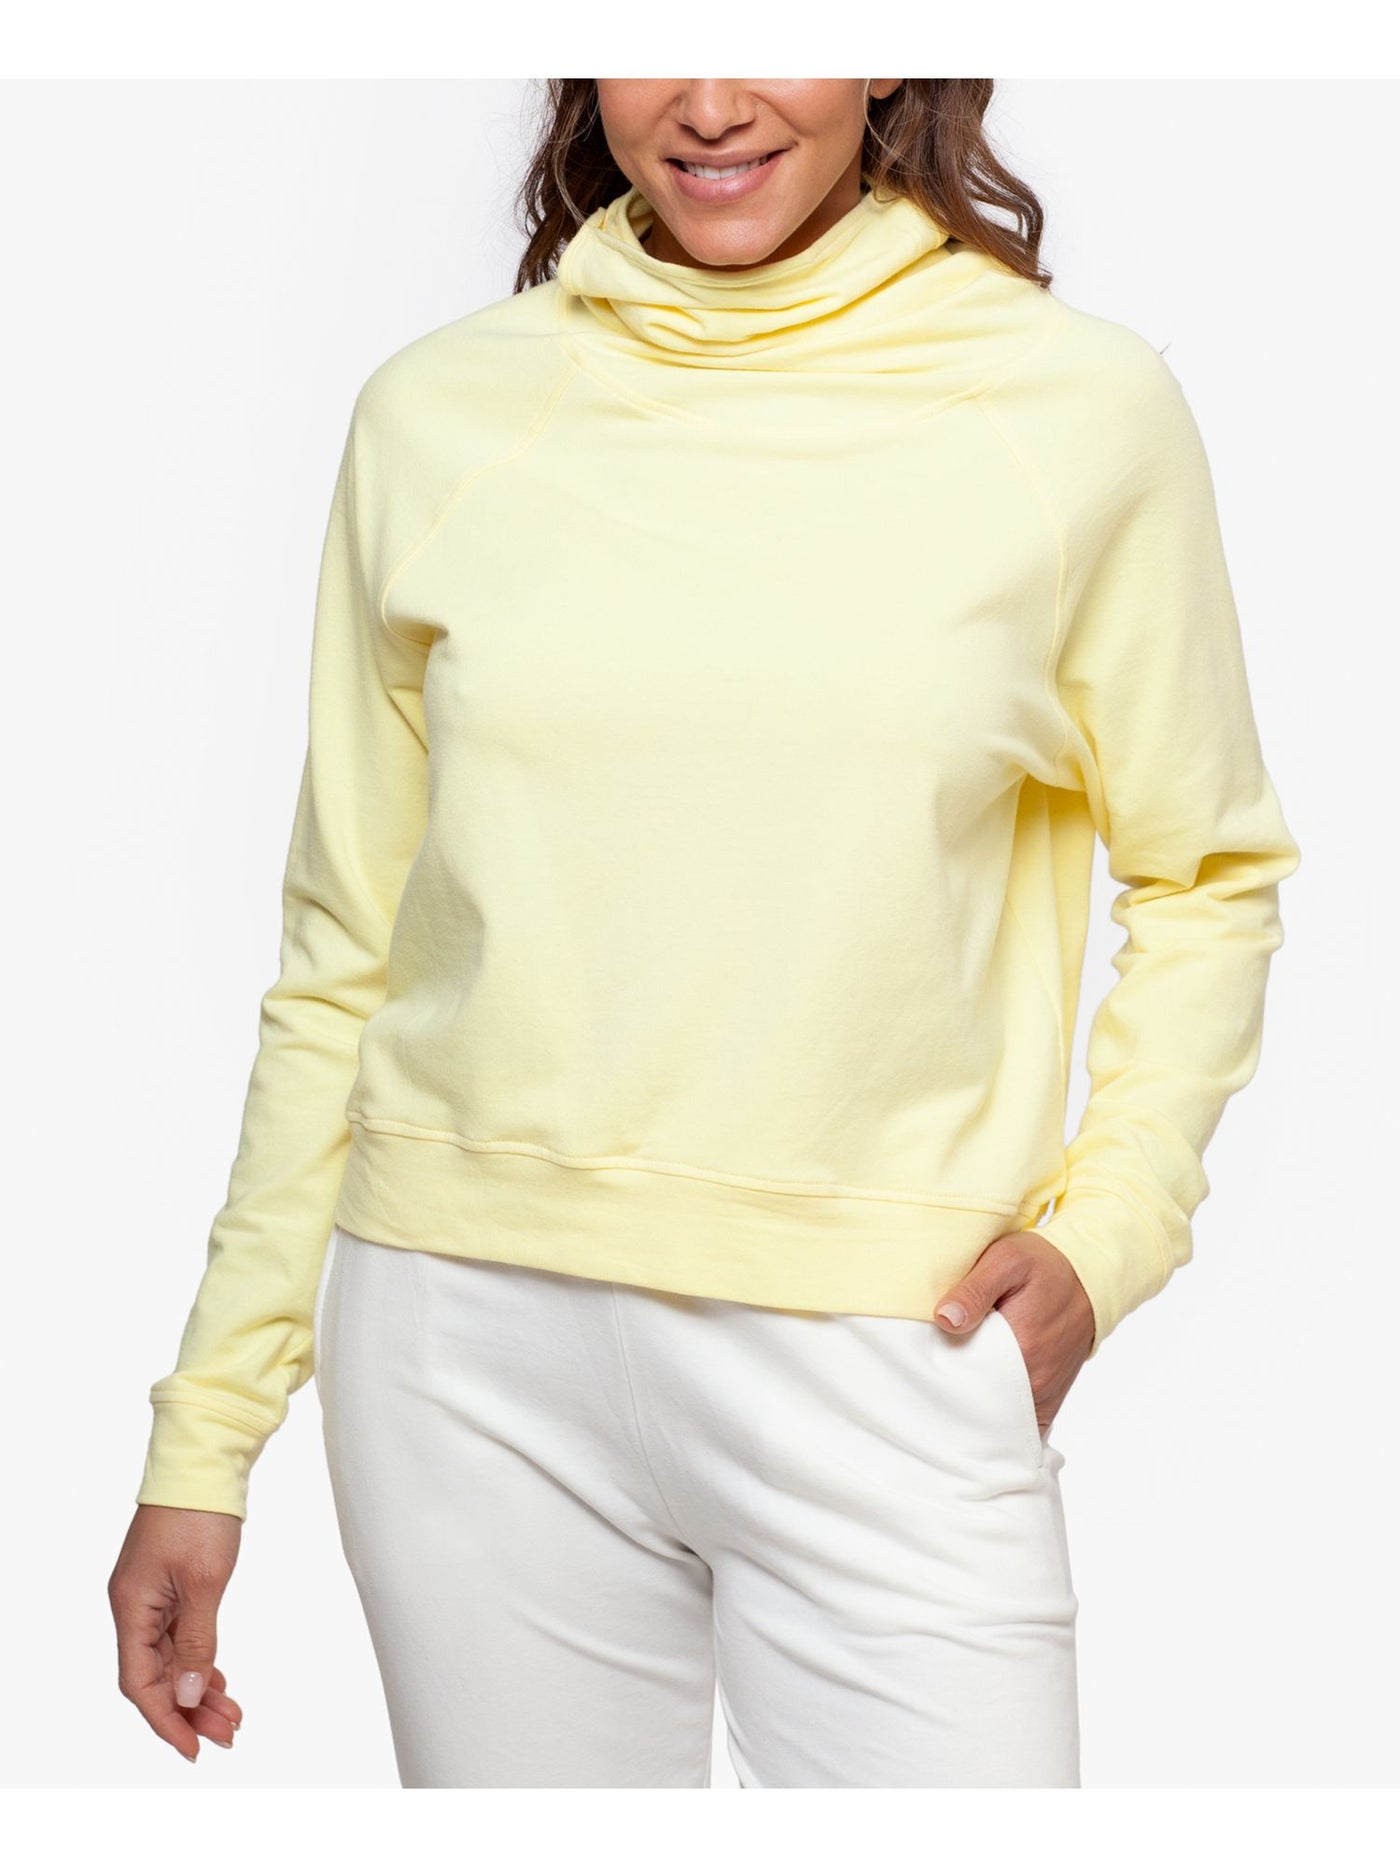 BAM BY BETSY & ADAM Womens Yellow Stretch Long Sleeve Zip Neck Crop Top XL